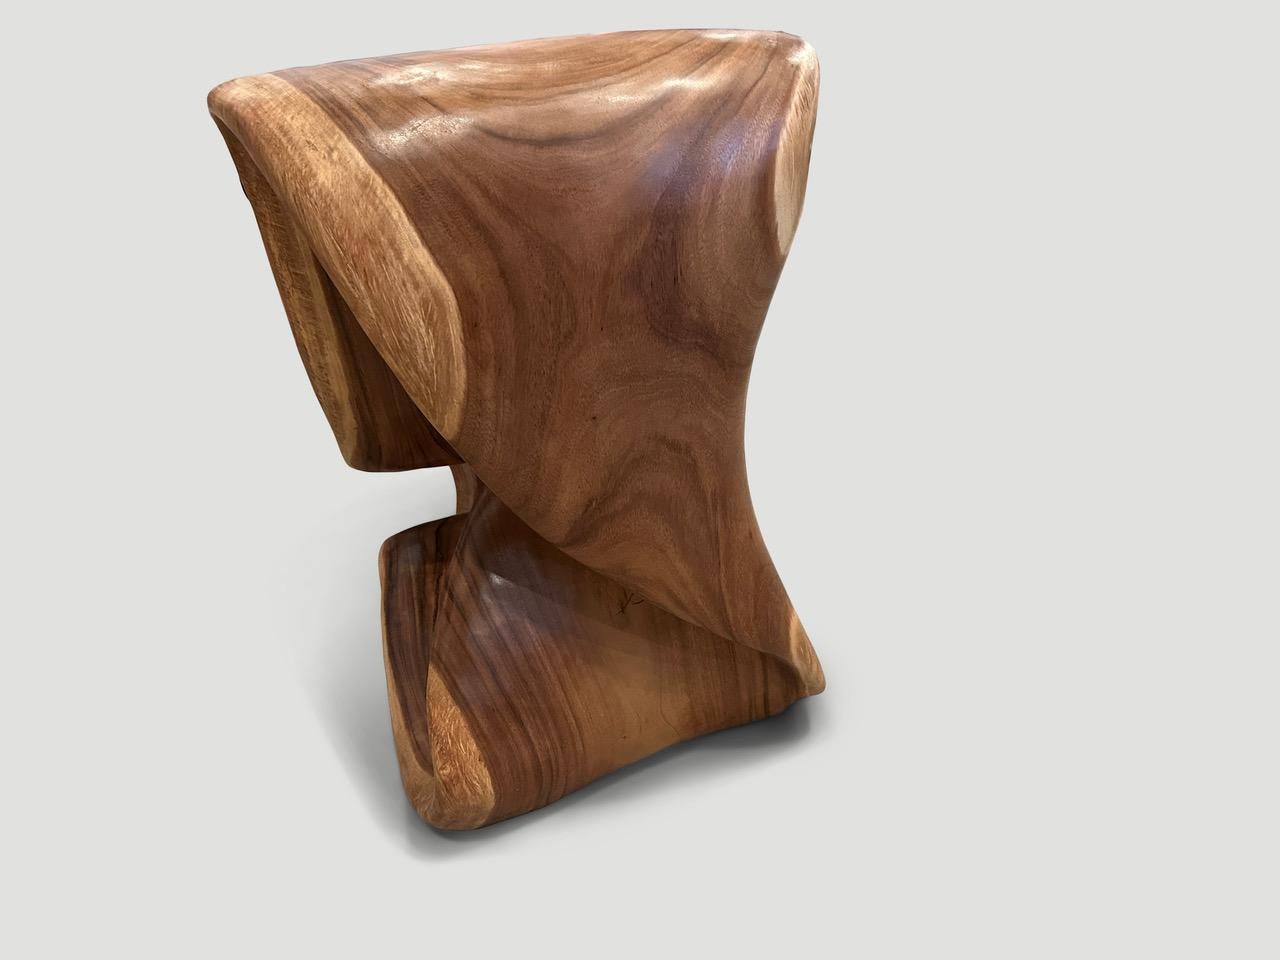 Andrianna Shamaris Impressive Soar Wood Sculptural Chair  For Sale 1